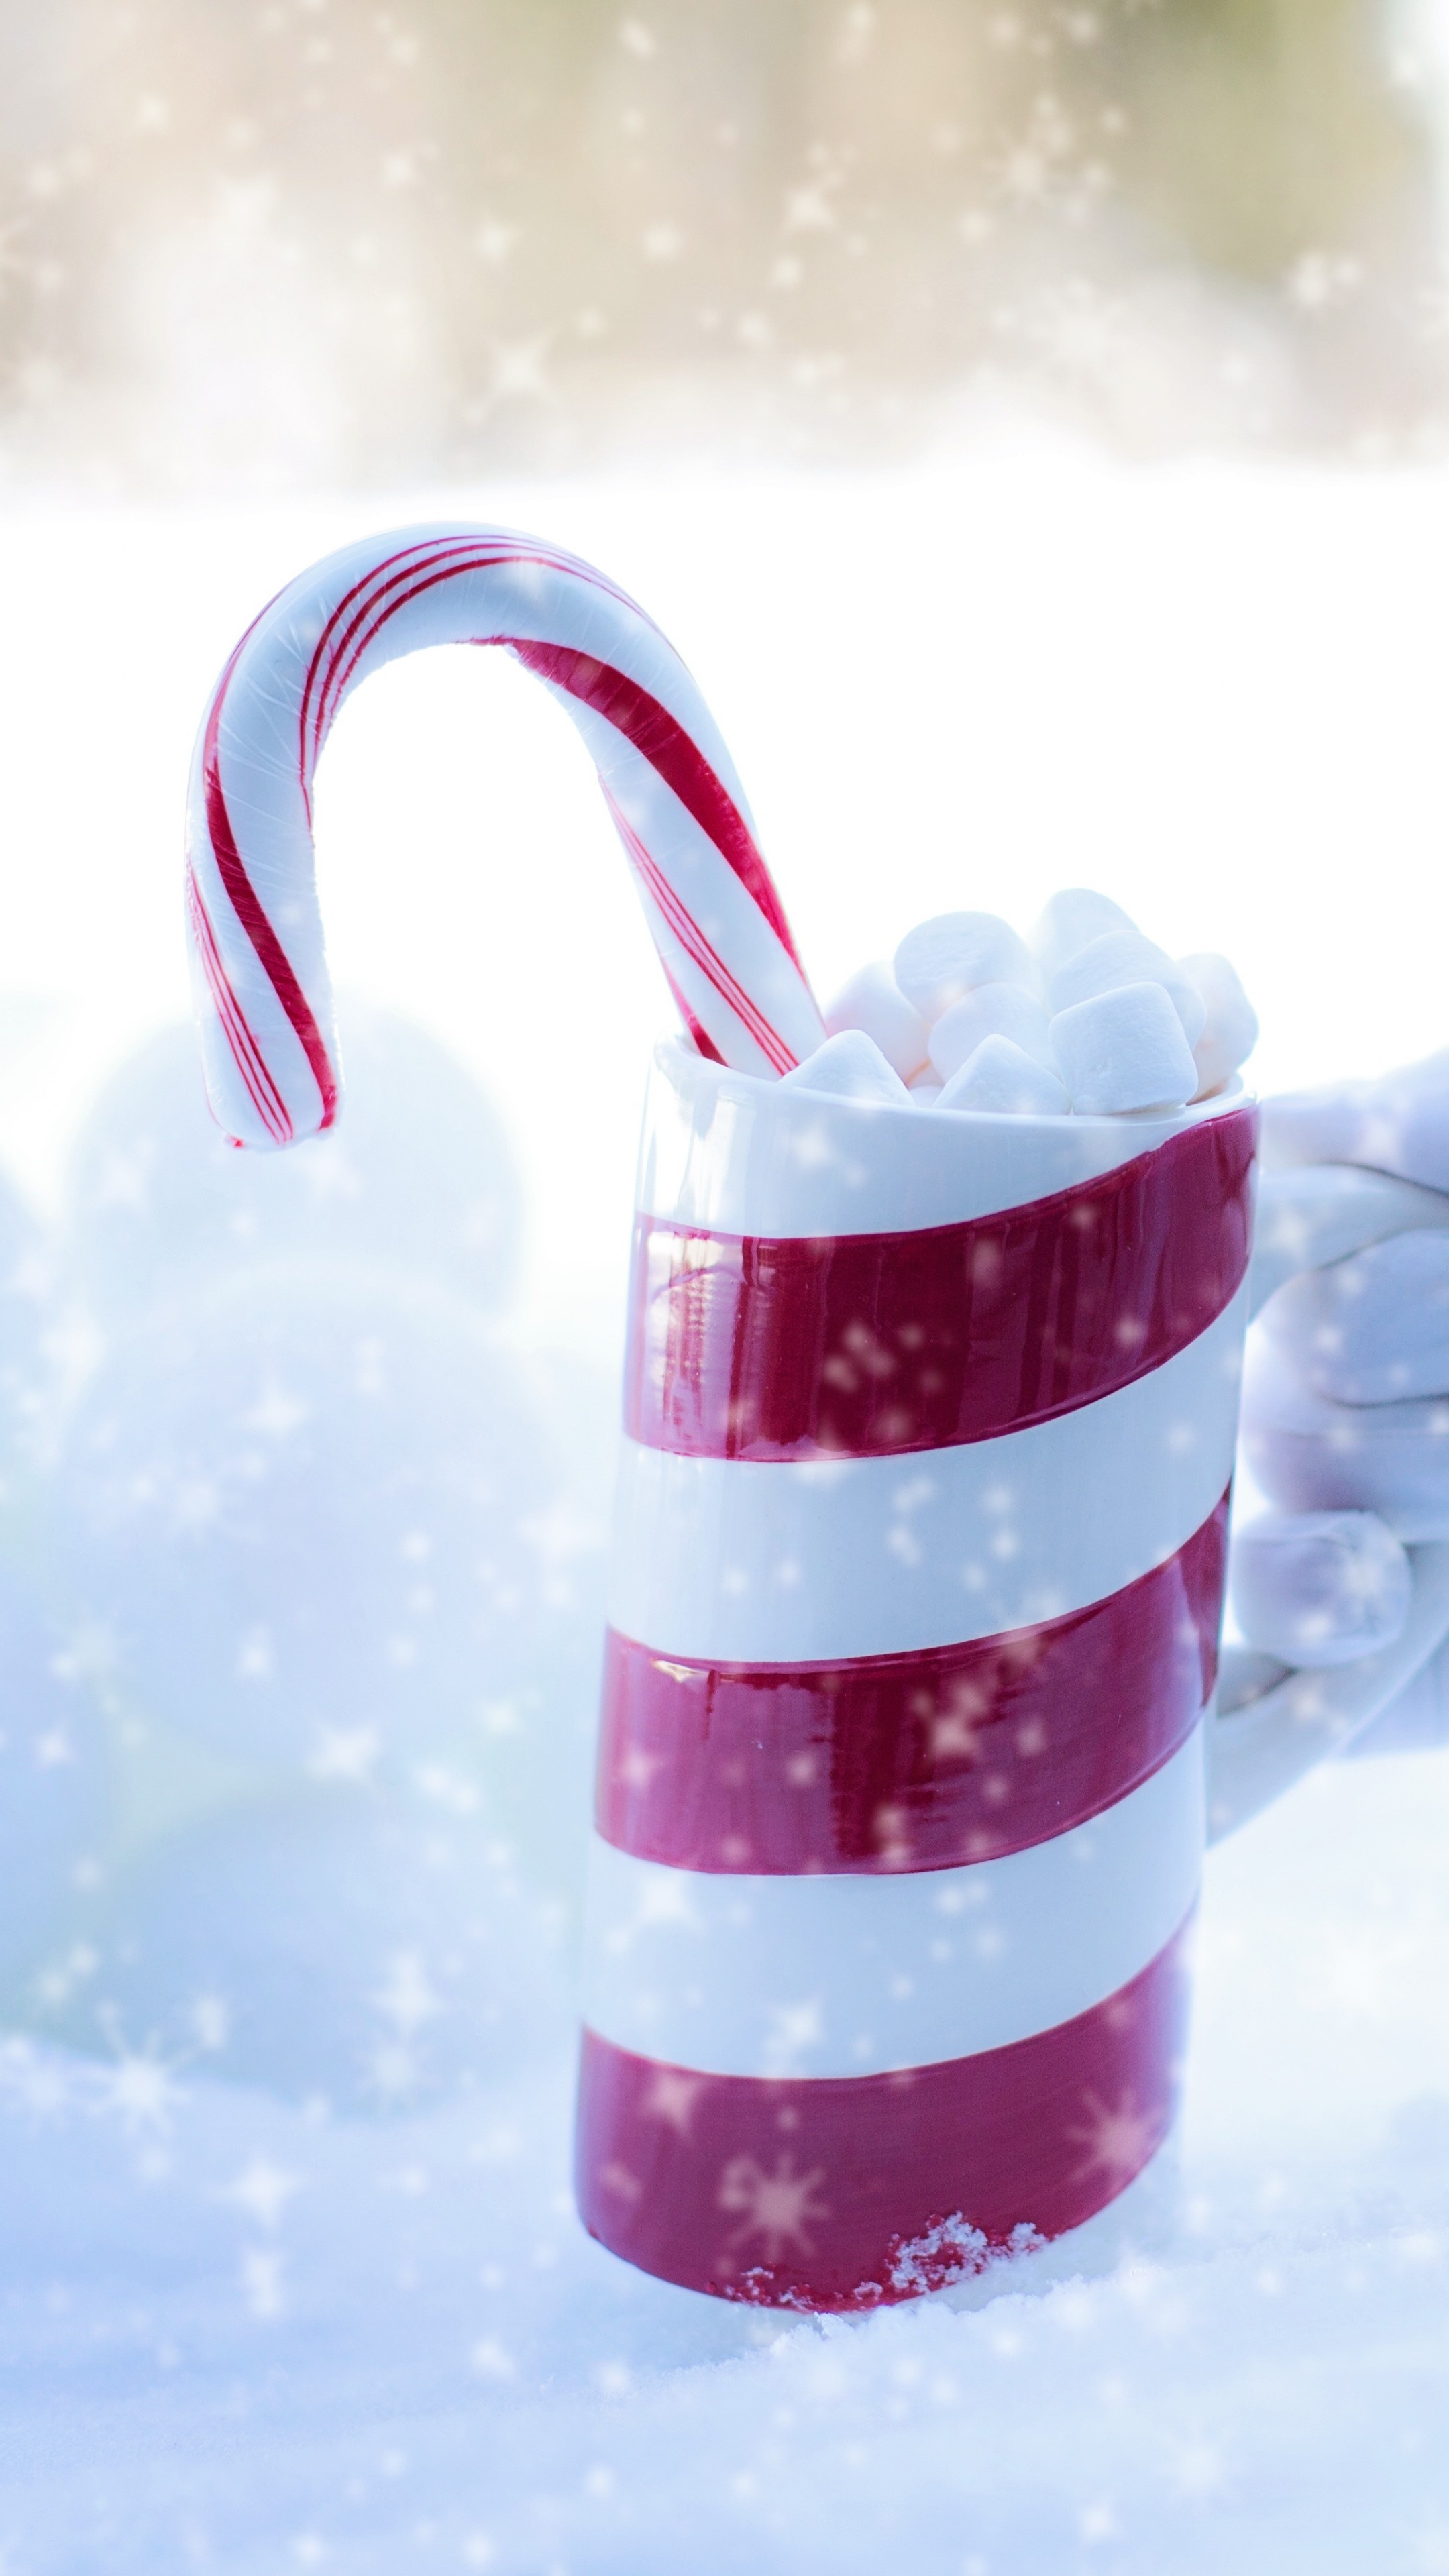 Santa's candy cup, Snowy winter delight, Christmas sweetness, Festive decoration, 2160x3840 4K Handy